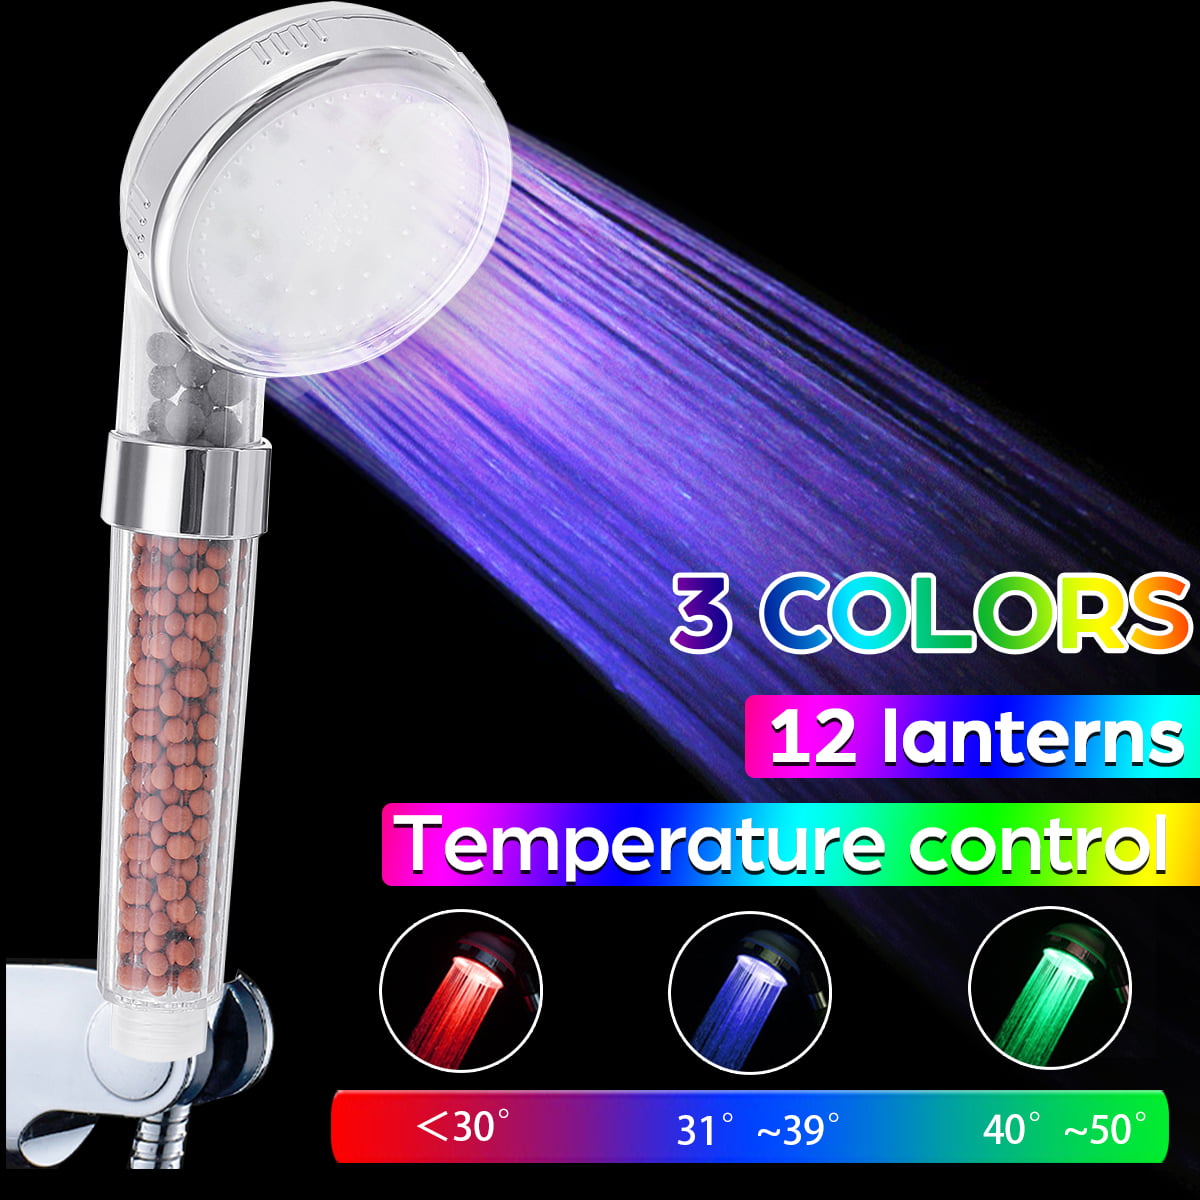 Easy installationBathroom Shower Head with LED 7 Change Color High Pressure Water Saving Negative Ion Filter Shower Sprayer